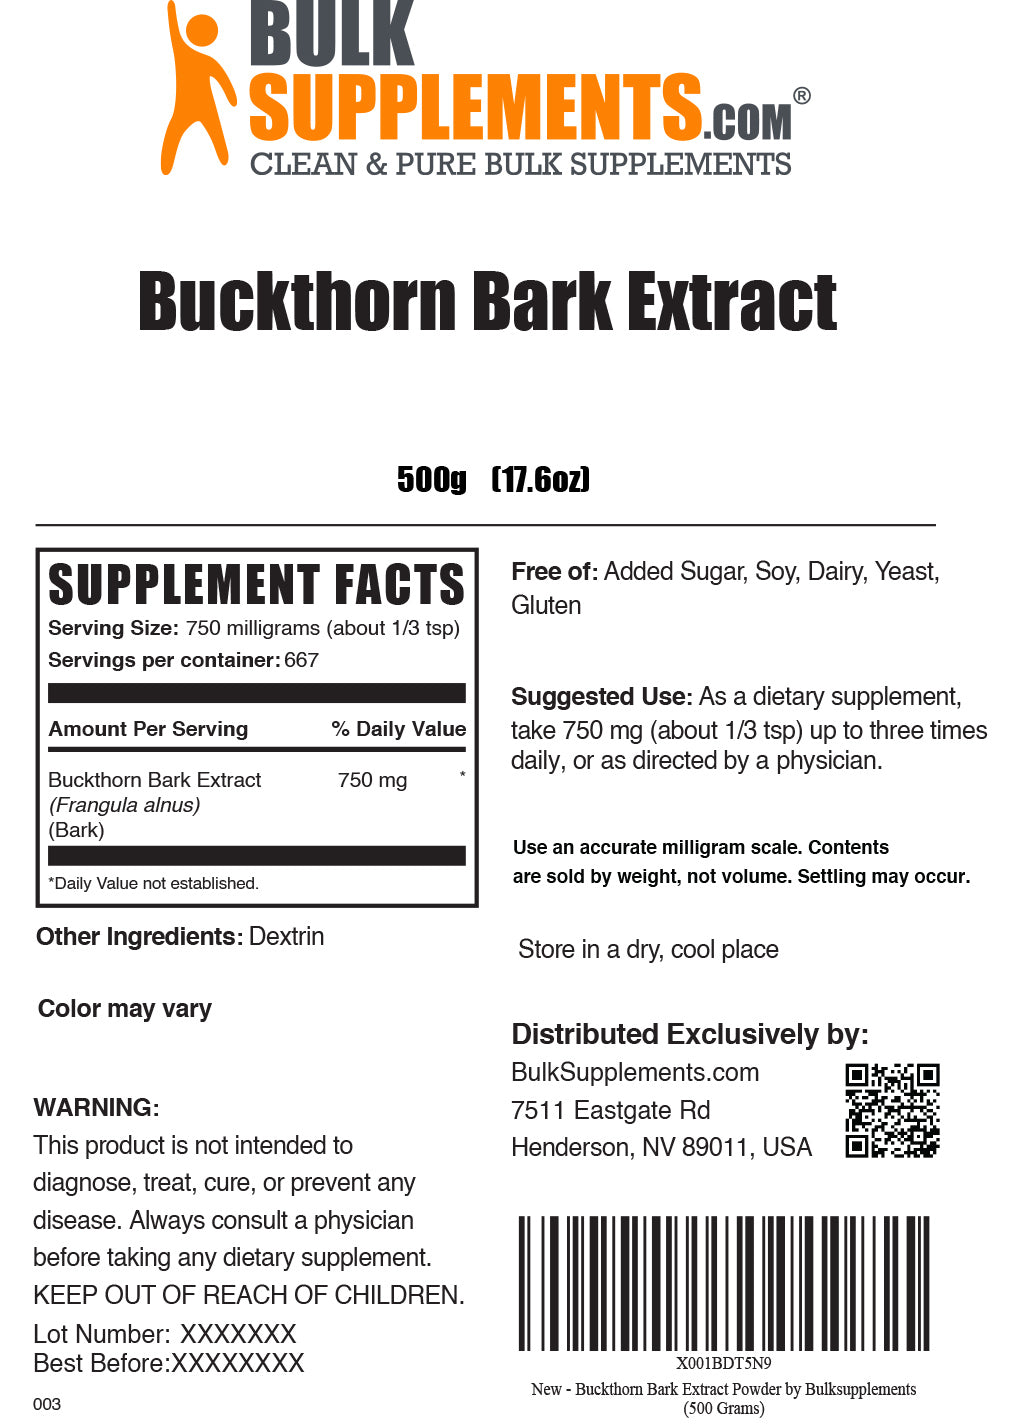 Buckthorn Bark Extract Powder